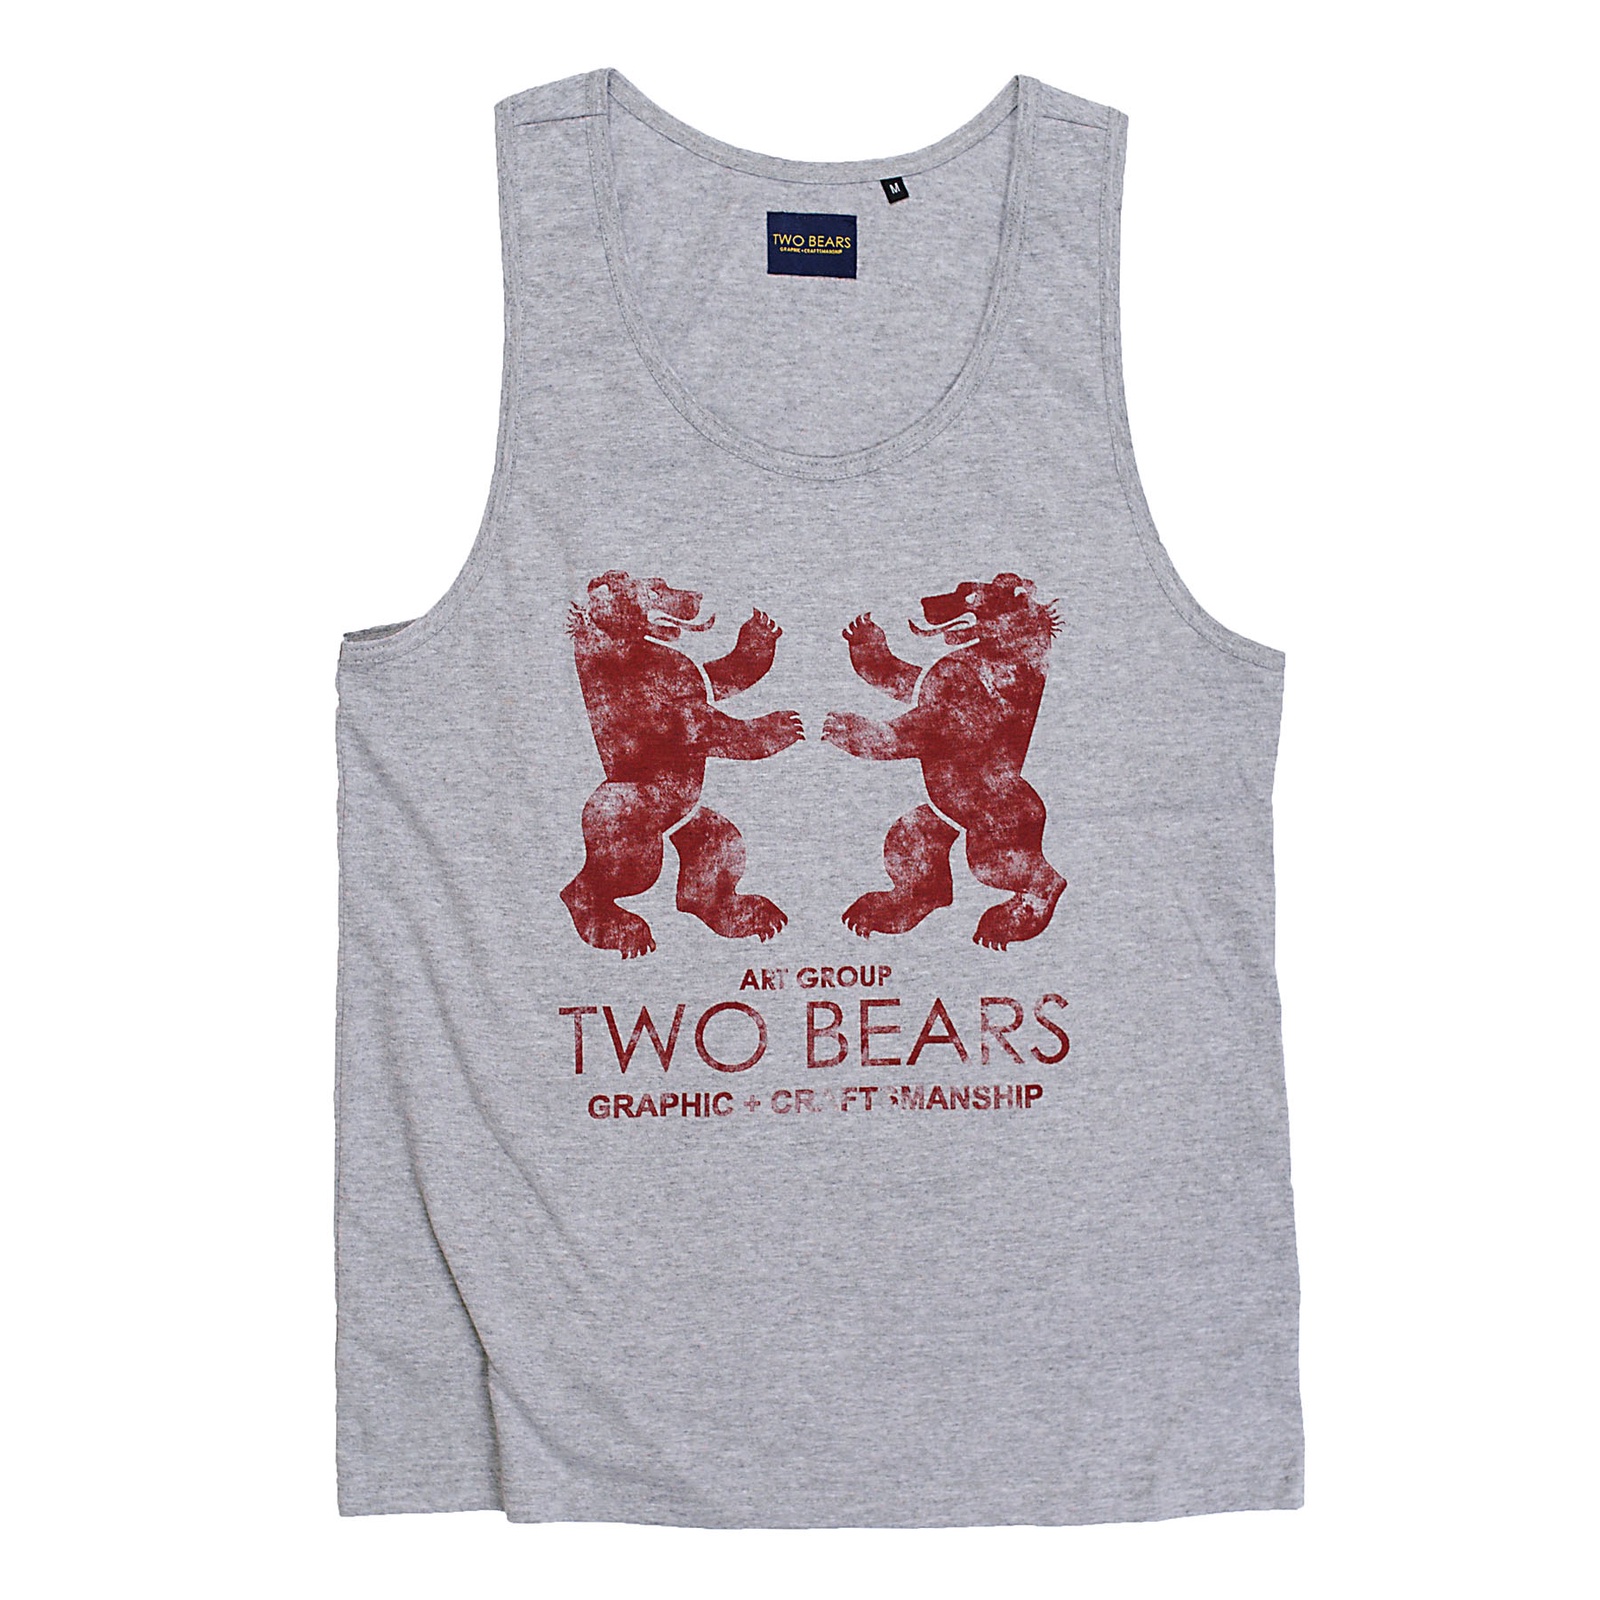 Bears 2 shop. Майка Bears. Бренд 2 Bears. Coolbear майка. Футболки korpo two футболка.